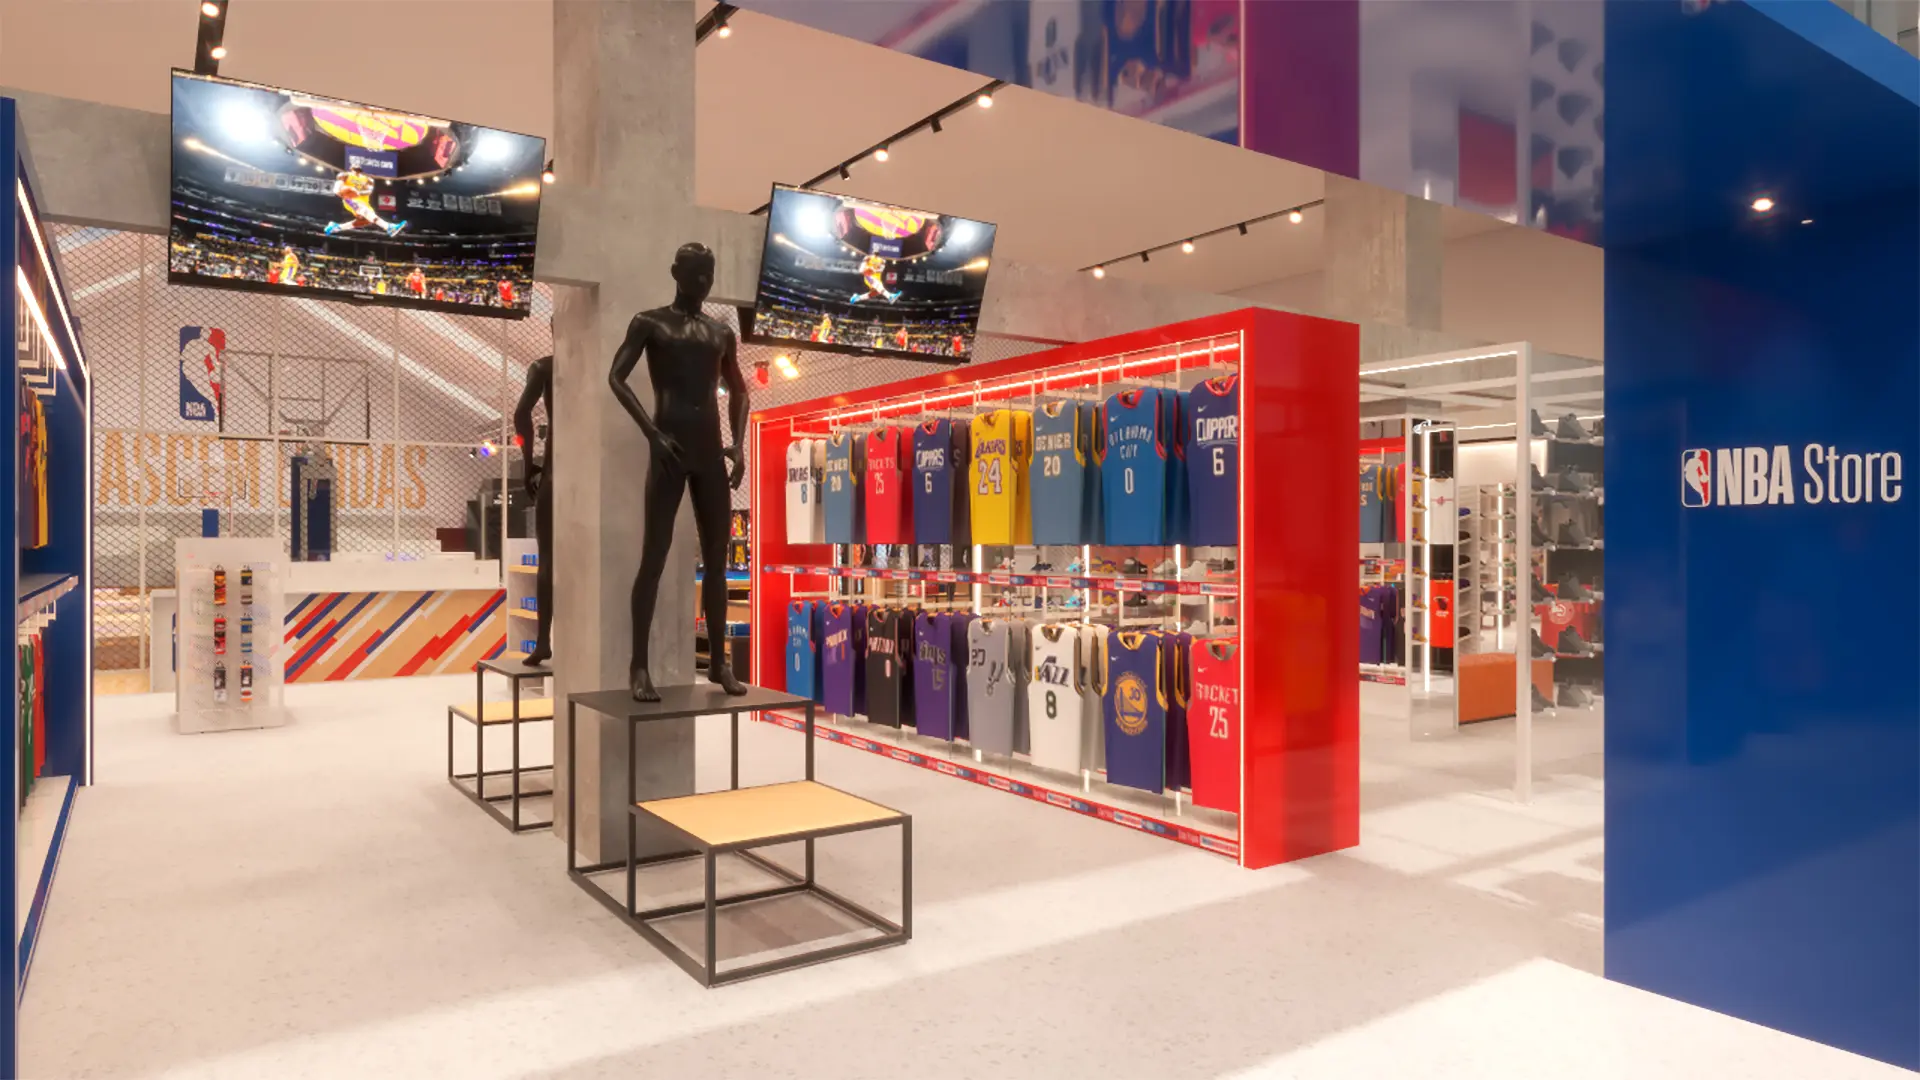 Uptown Barra, shopping do Rio de Janeiro, inaugurará nova megaloja NBA Store Arena